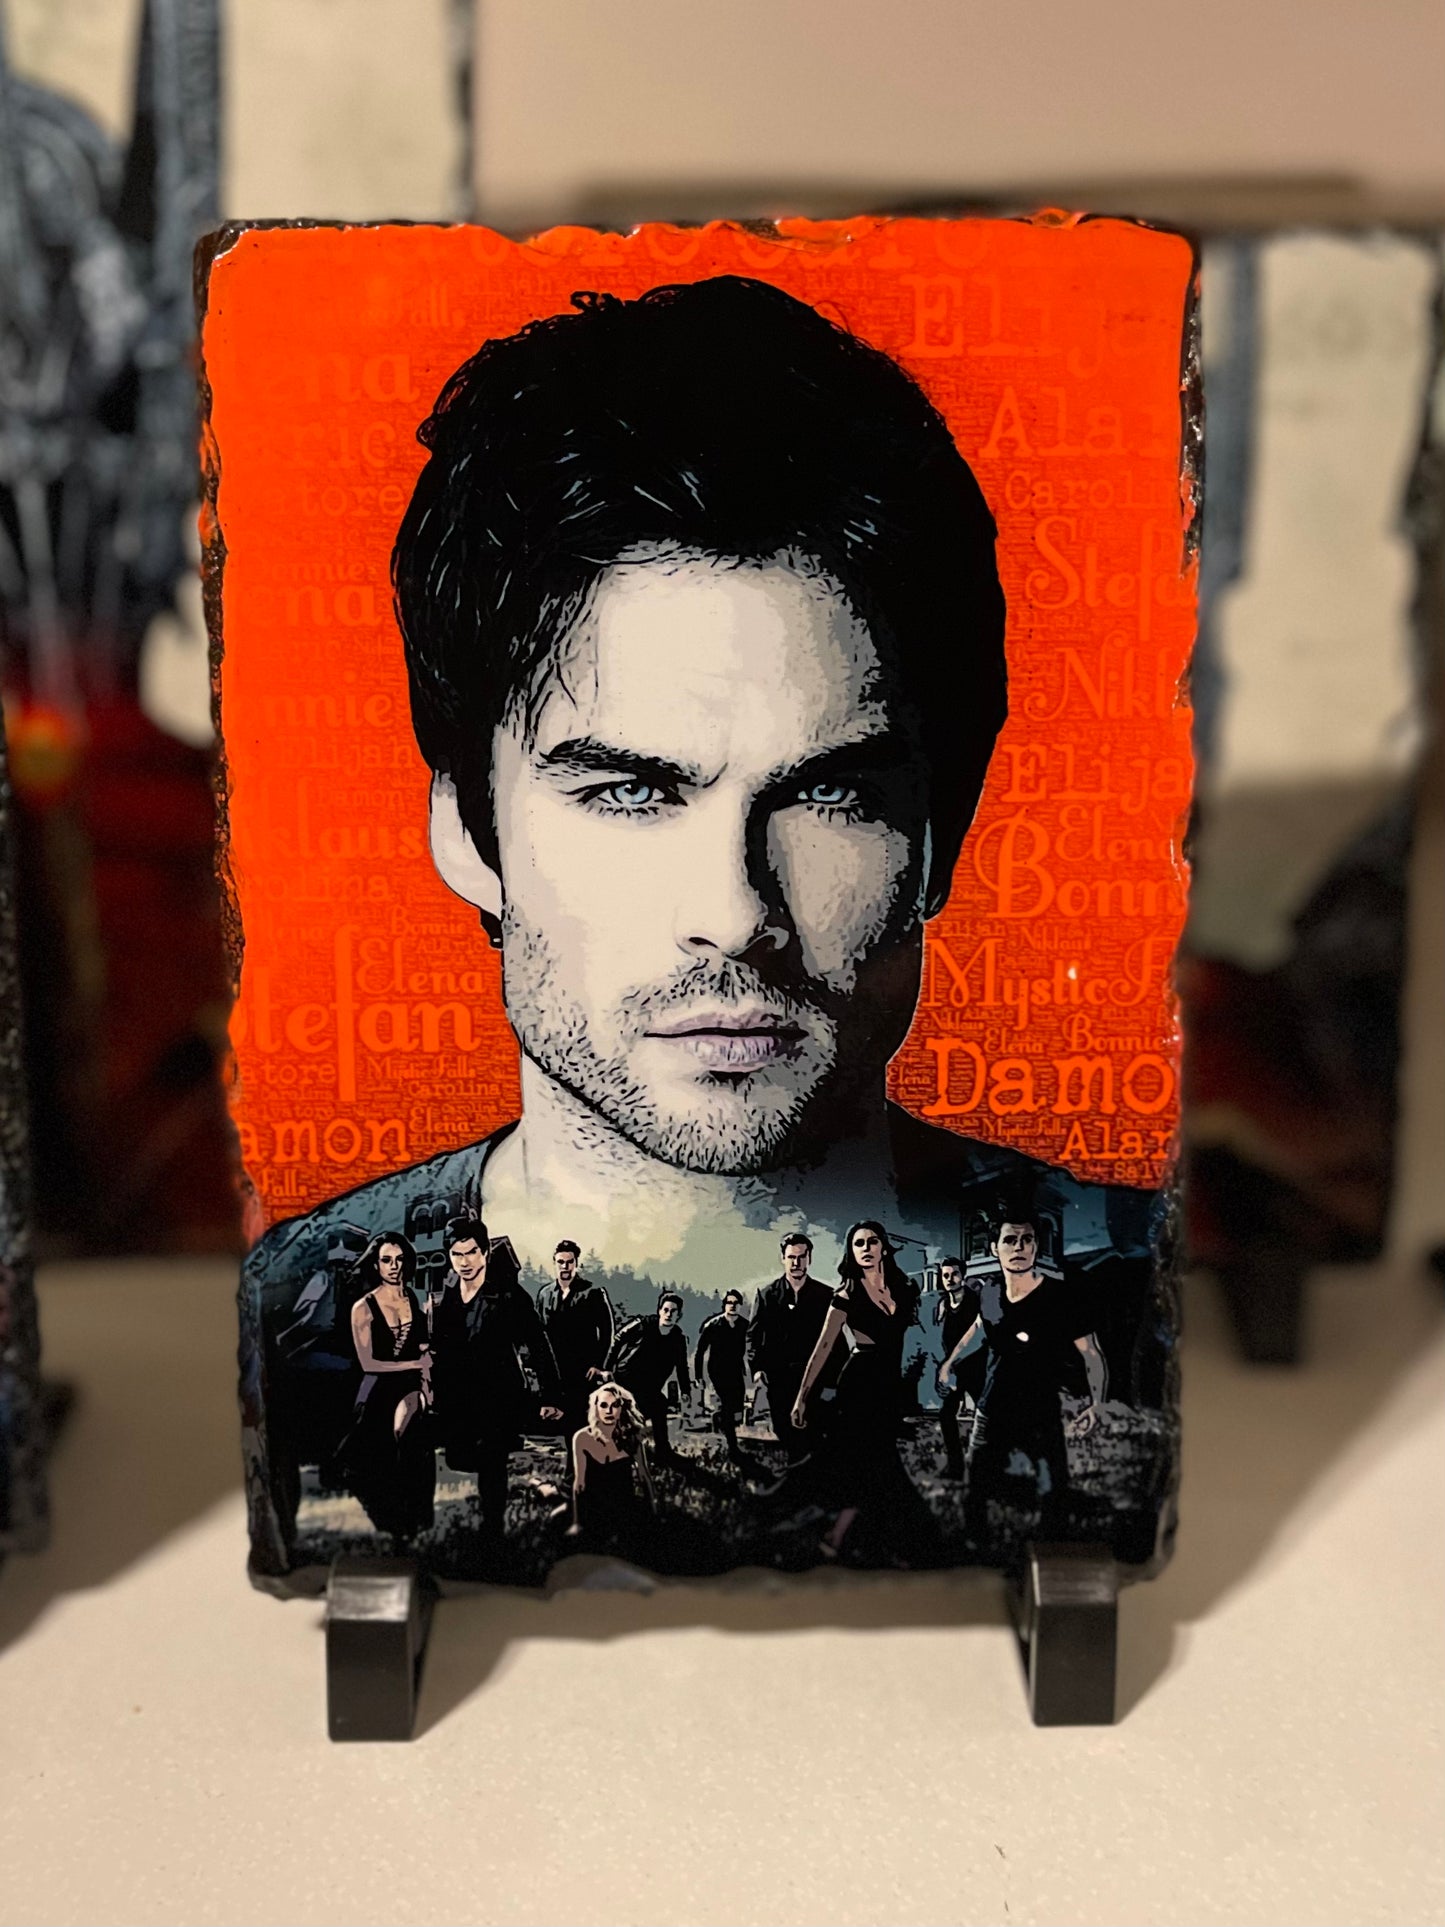 Vampire Diaries inspired Damon Salvatore artwork on Solid Rock Slate